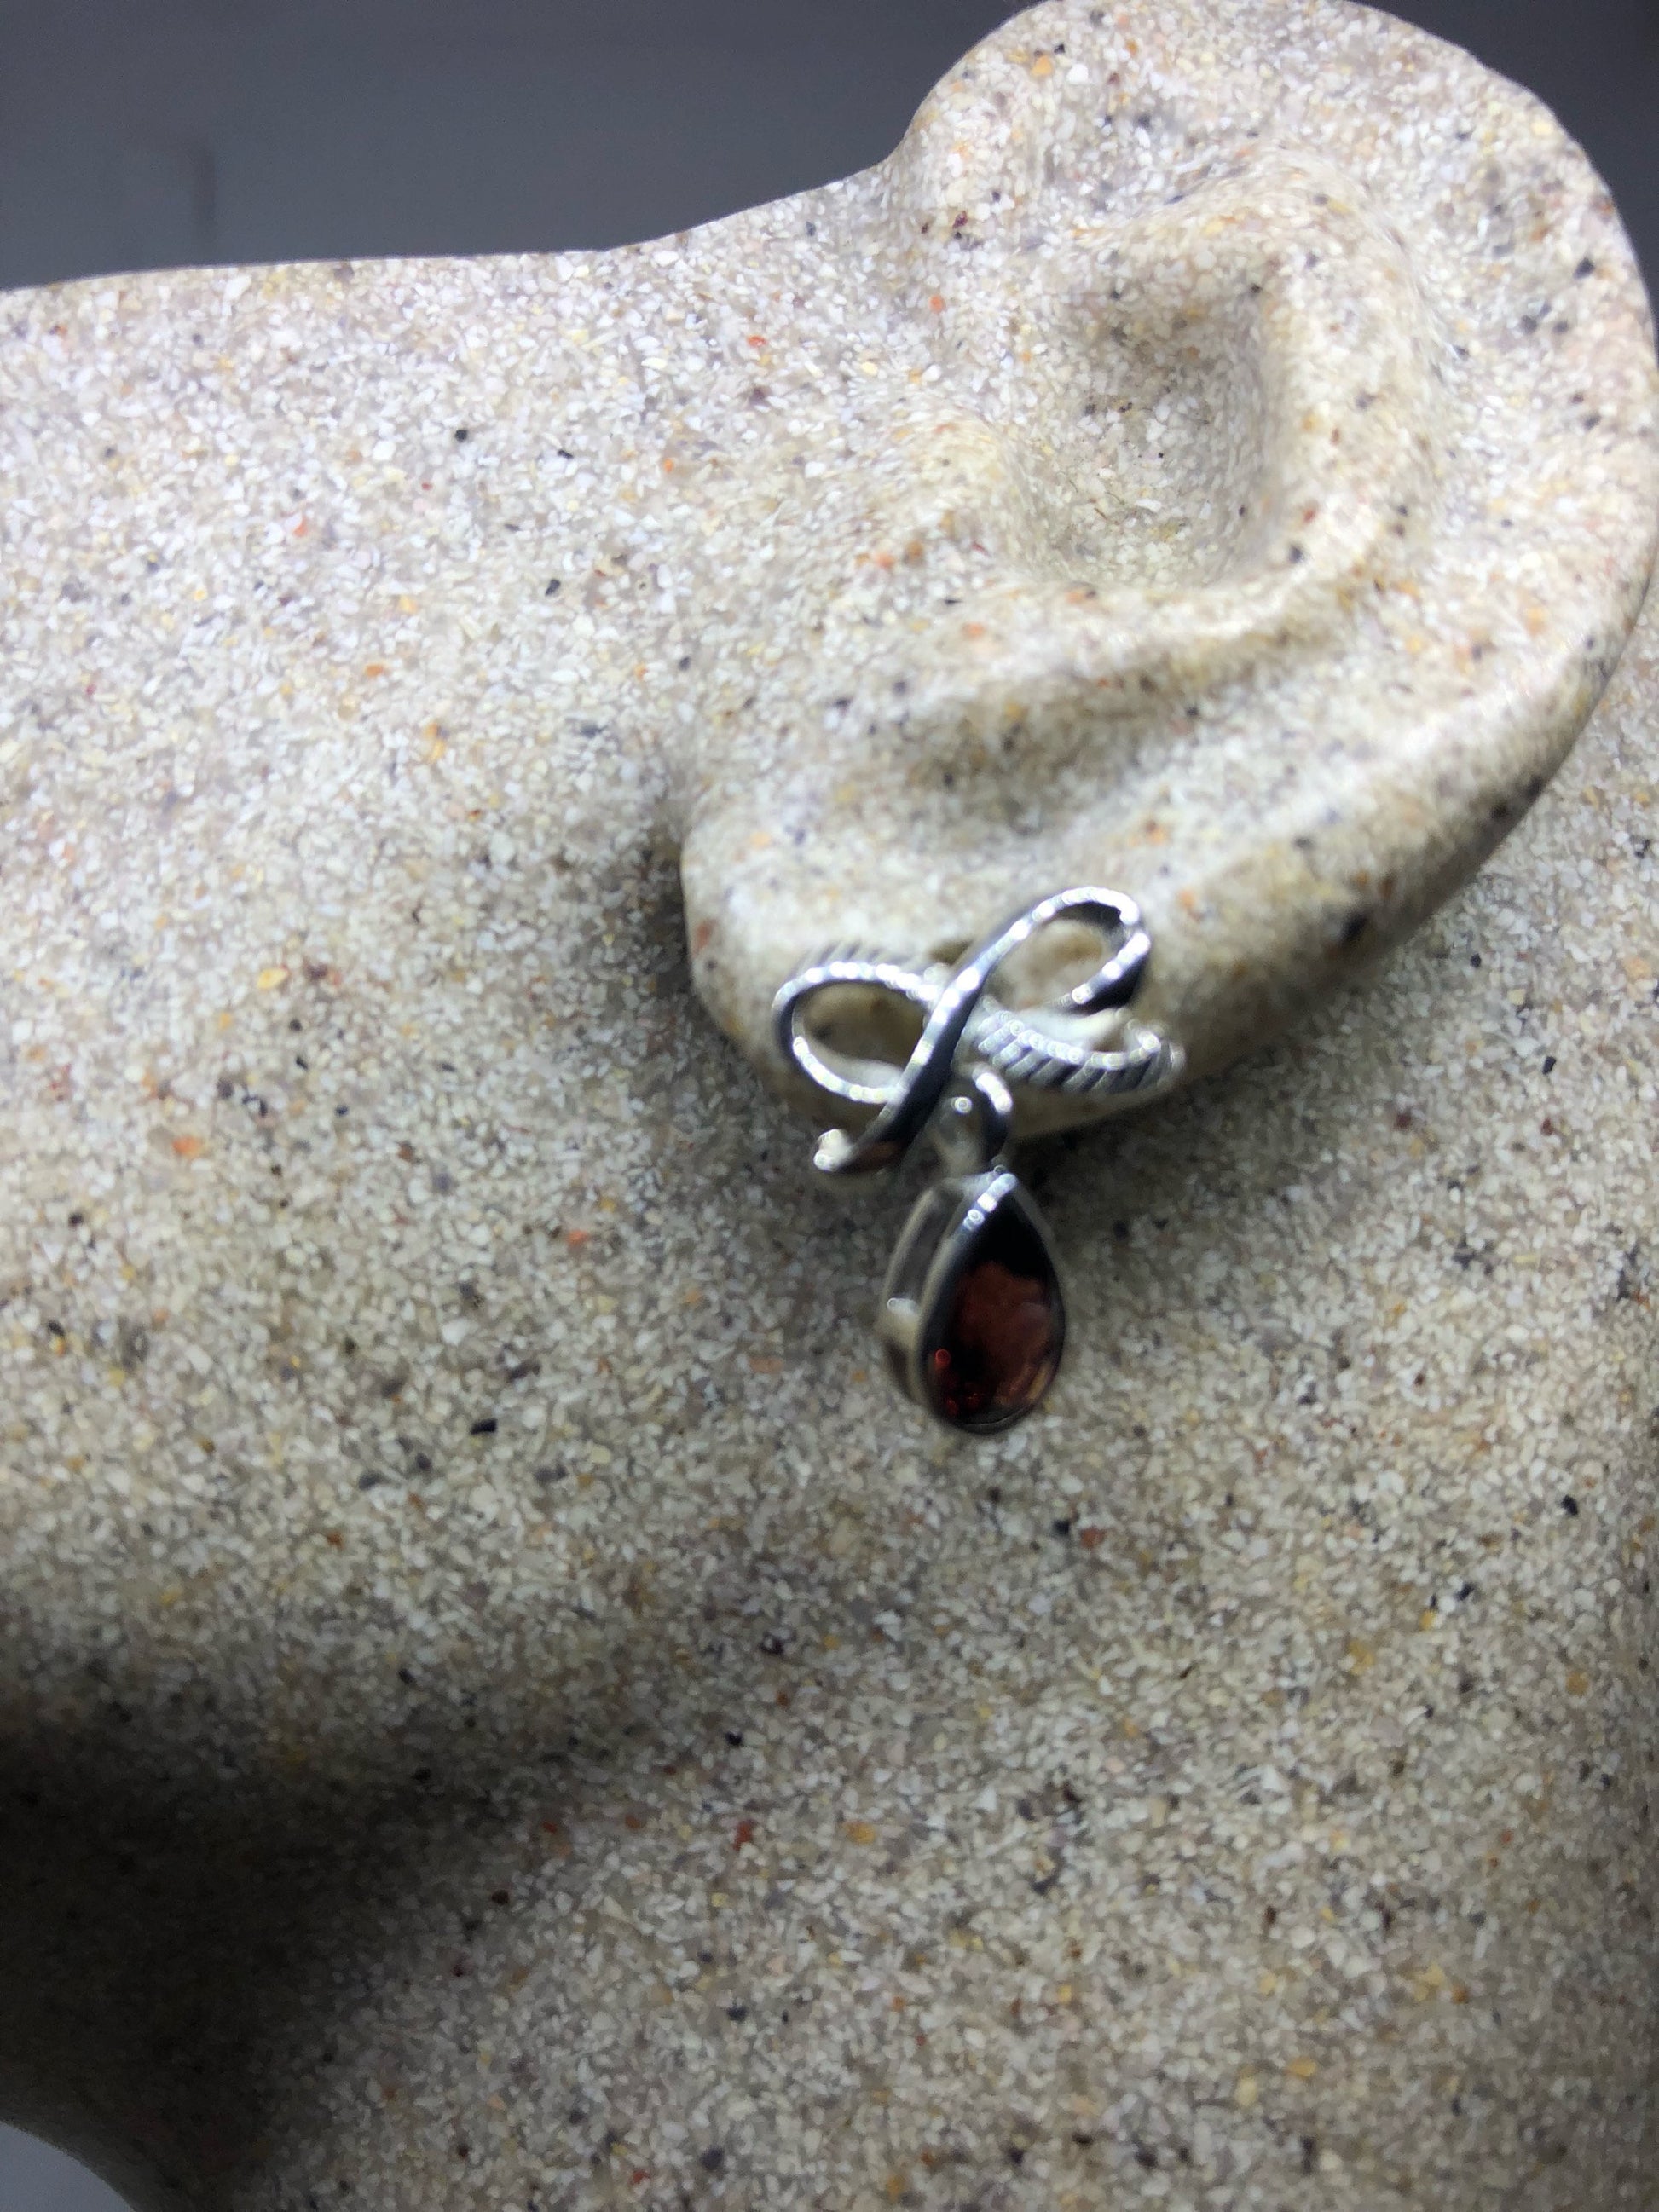 Vintage Bohemian Red Garnet Earrings 925 Sterling Silver Bow Dangle